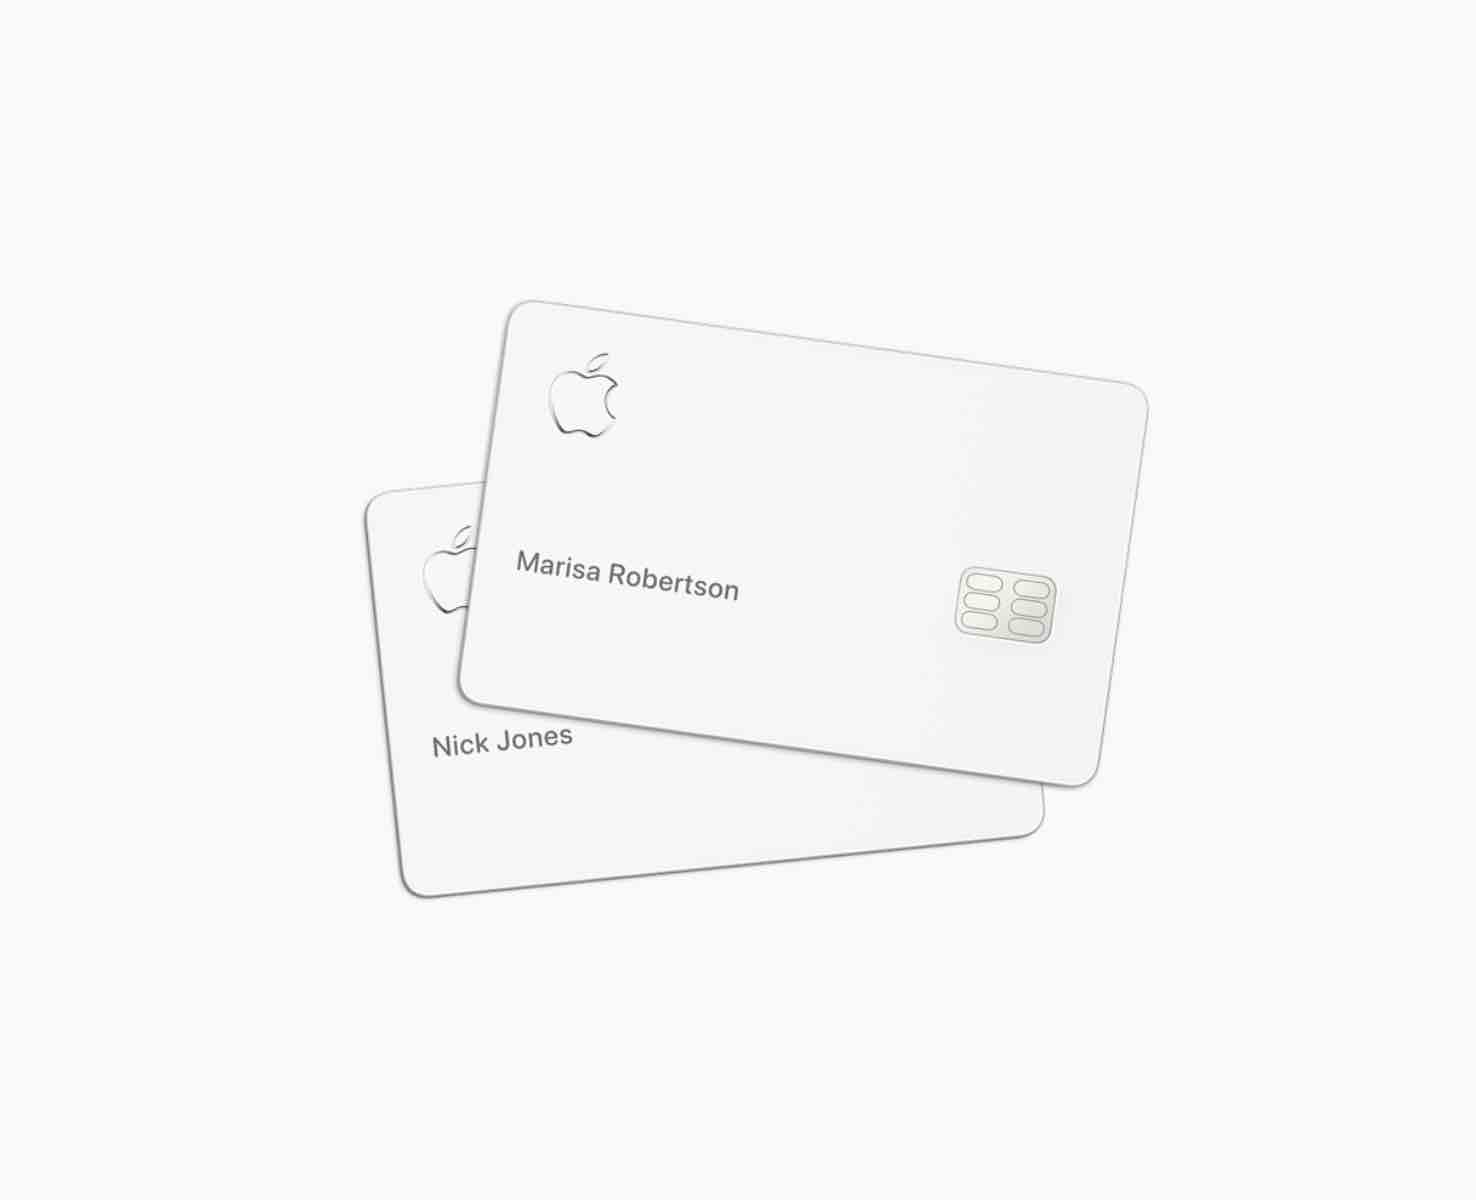 Apple Card Referral Offer December